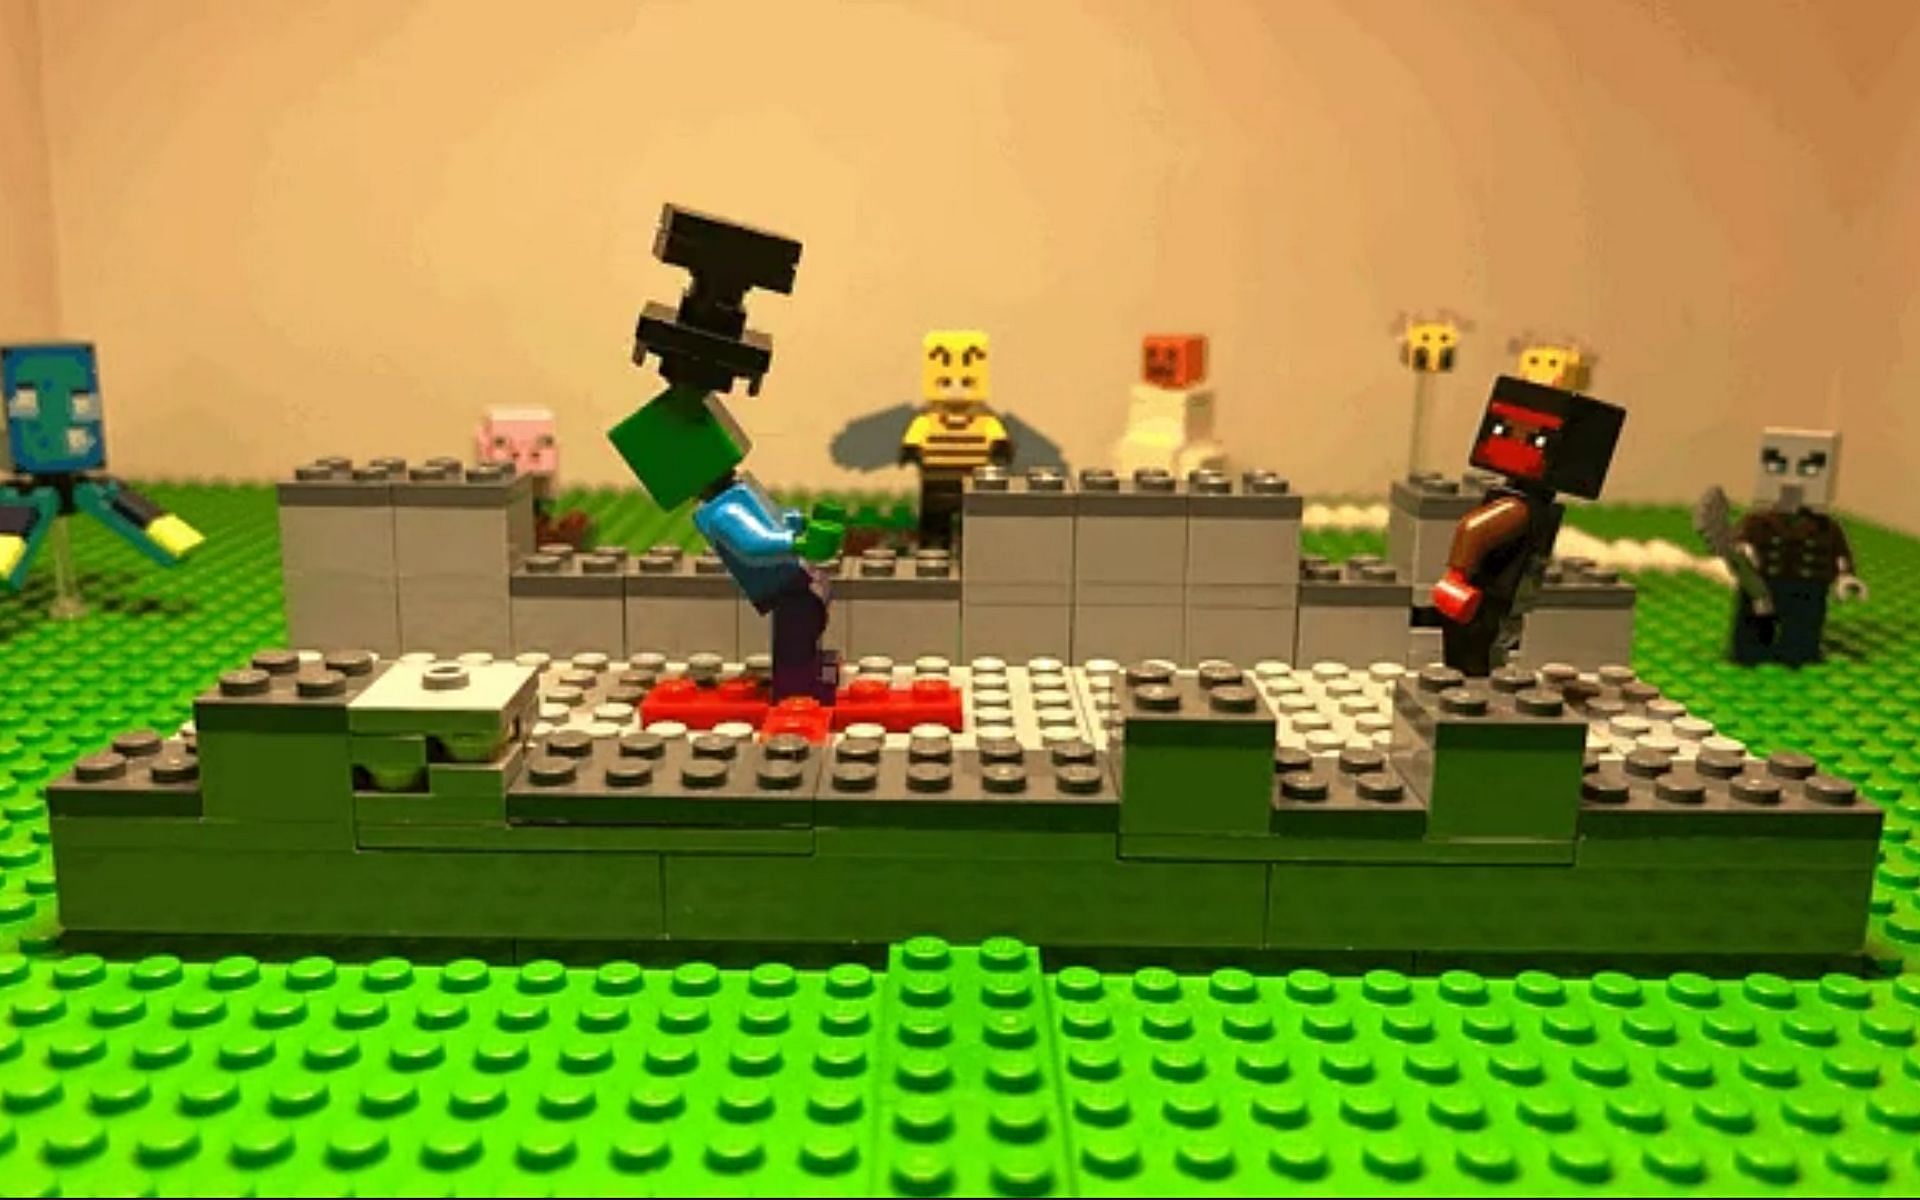 Minecraft Redditor creates brilliant stop motion animation with Lego